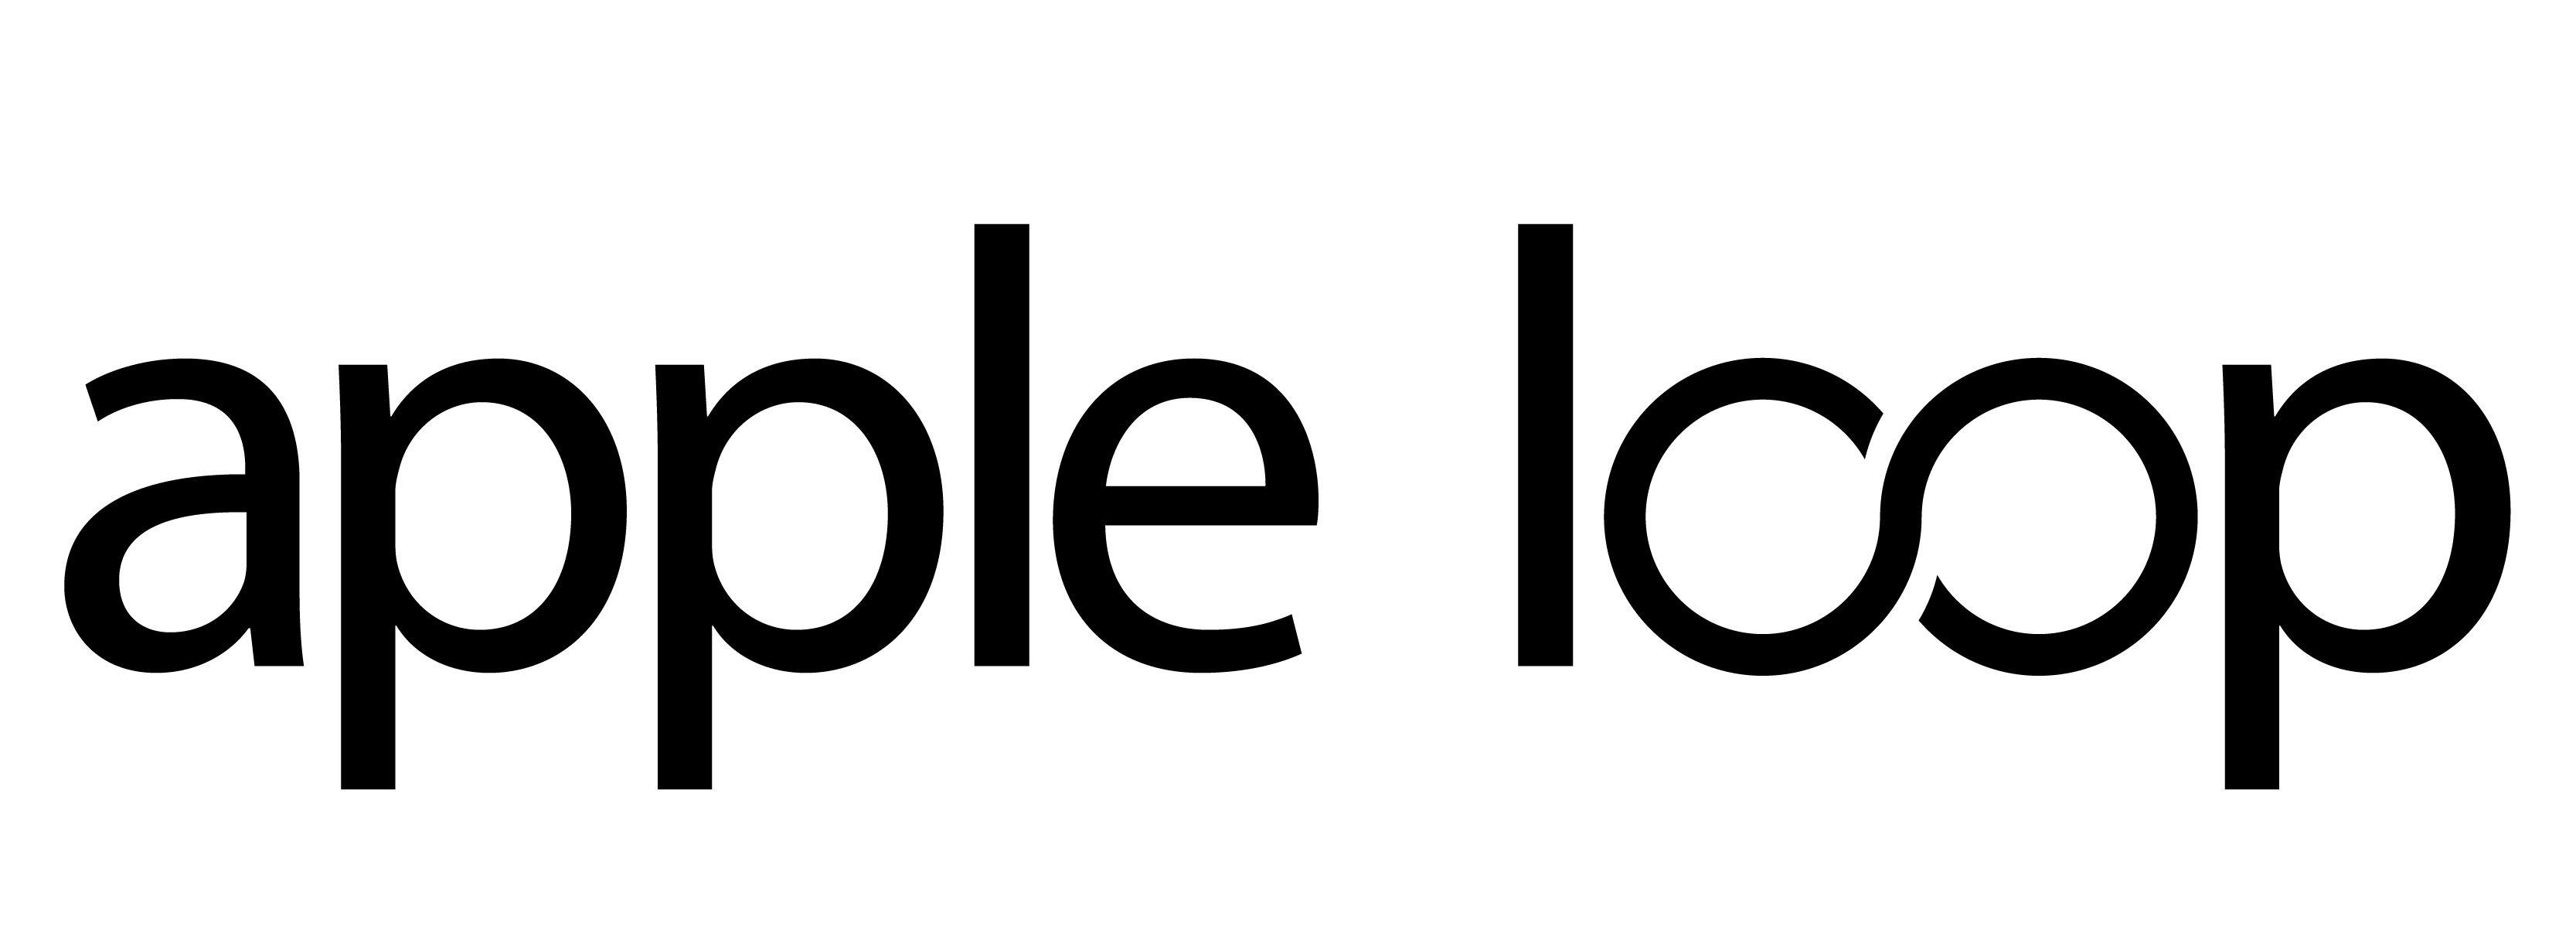 Apple Word Logo - Apple Loop: iPhone 5s Supply, iPhone 5c Discounts, Beating Coke ...